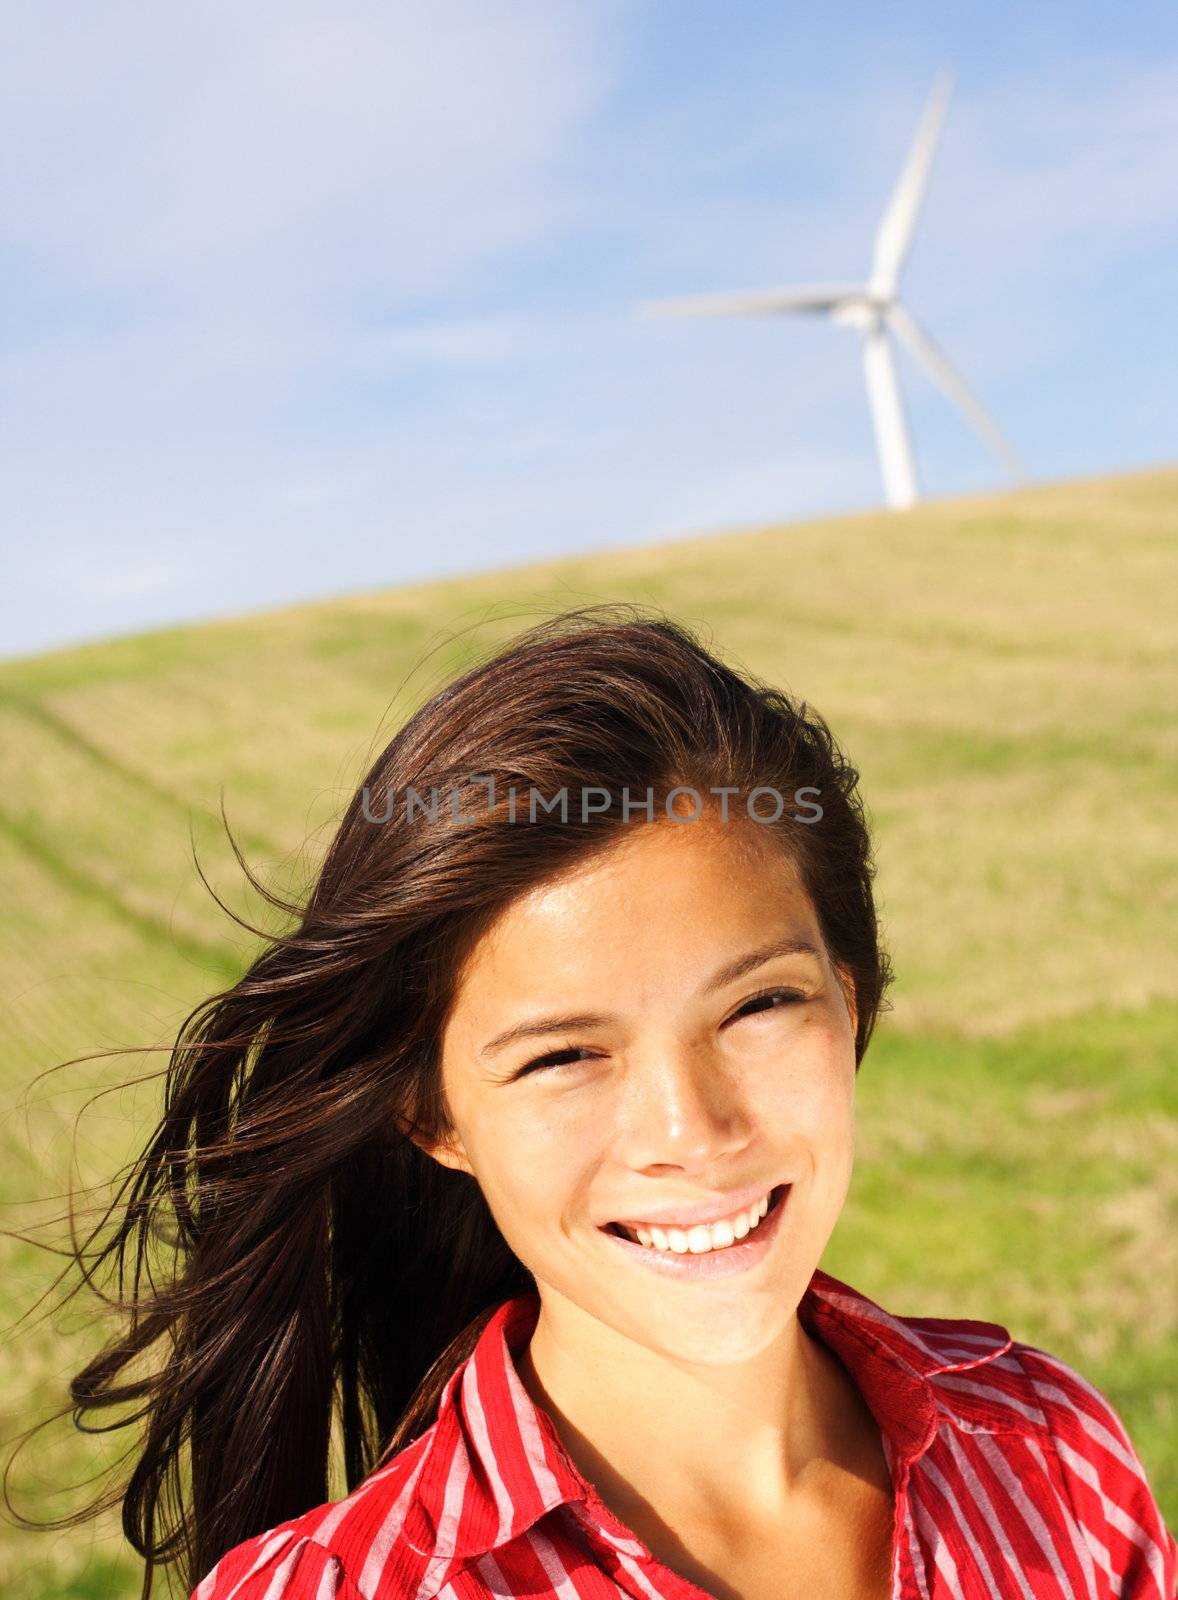 Wind turbine woman by Maridav